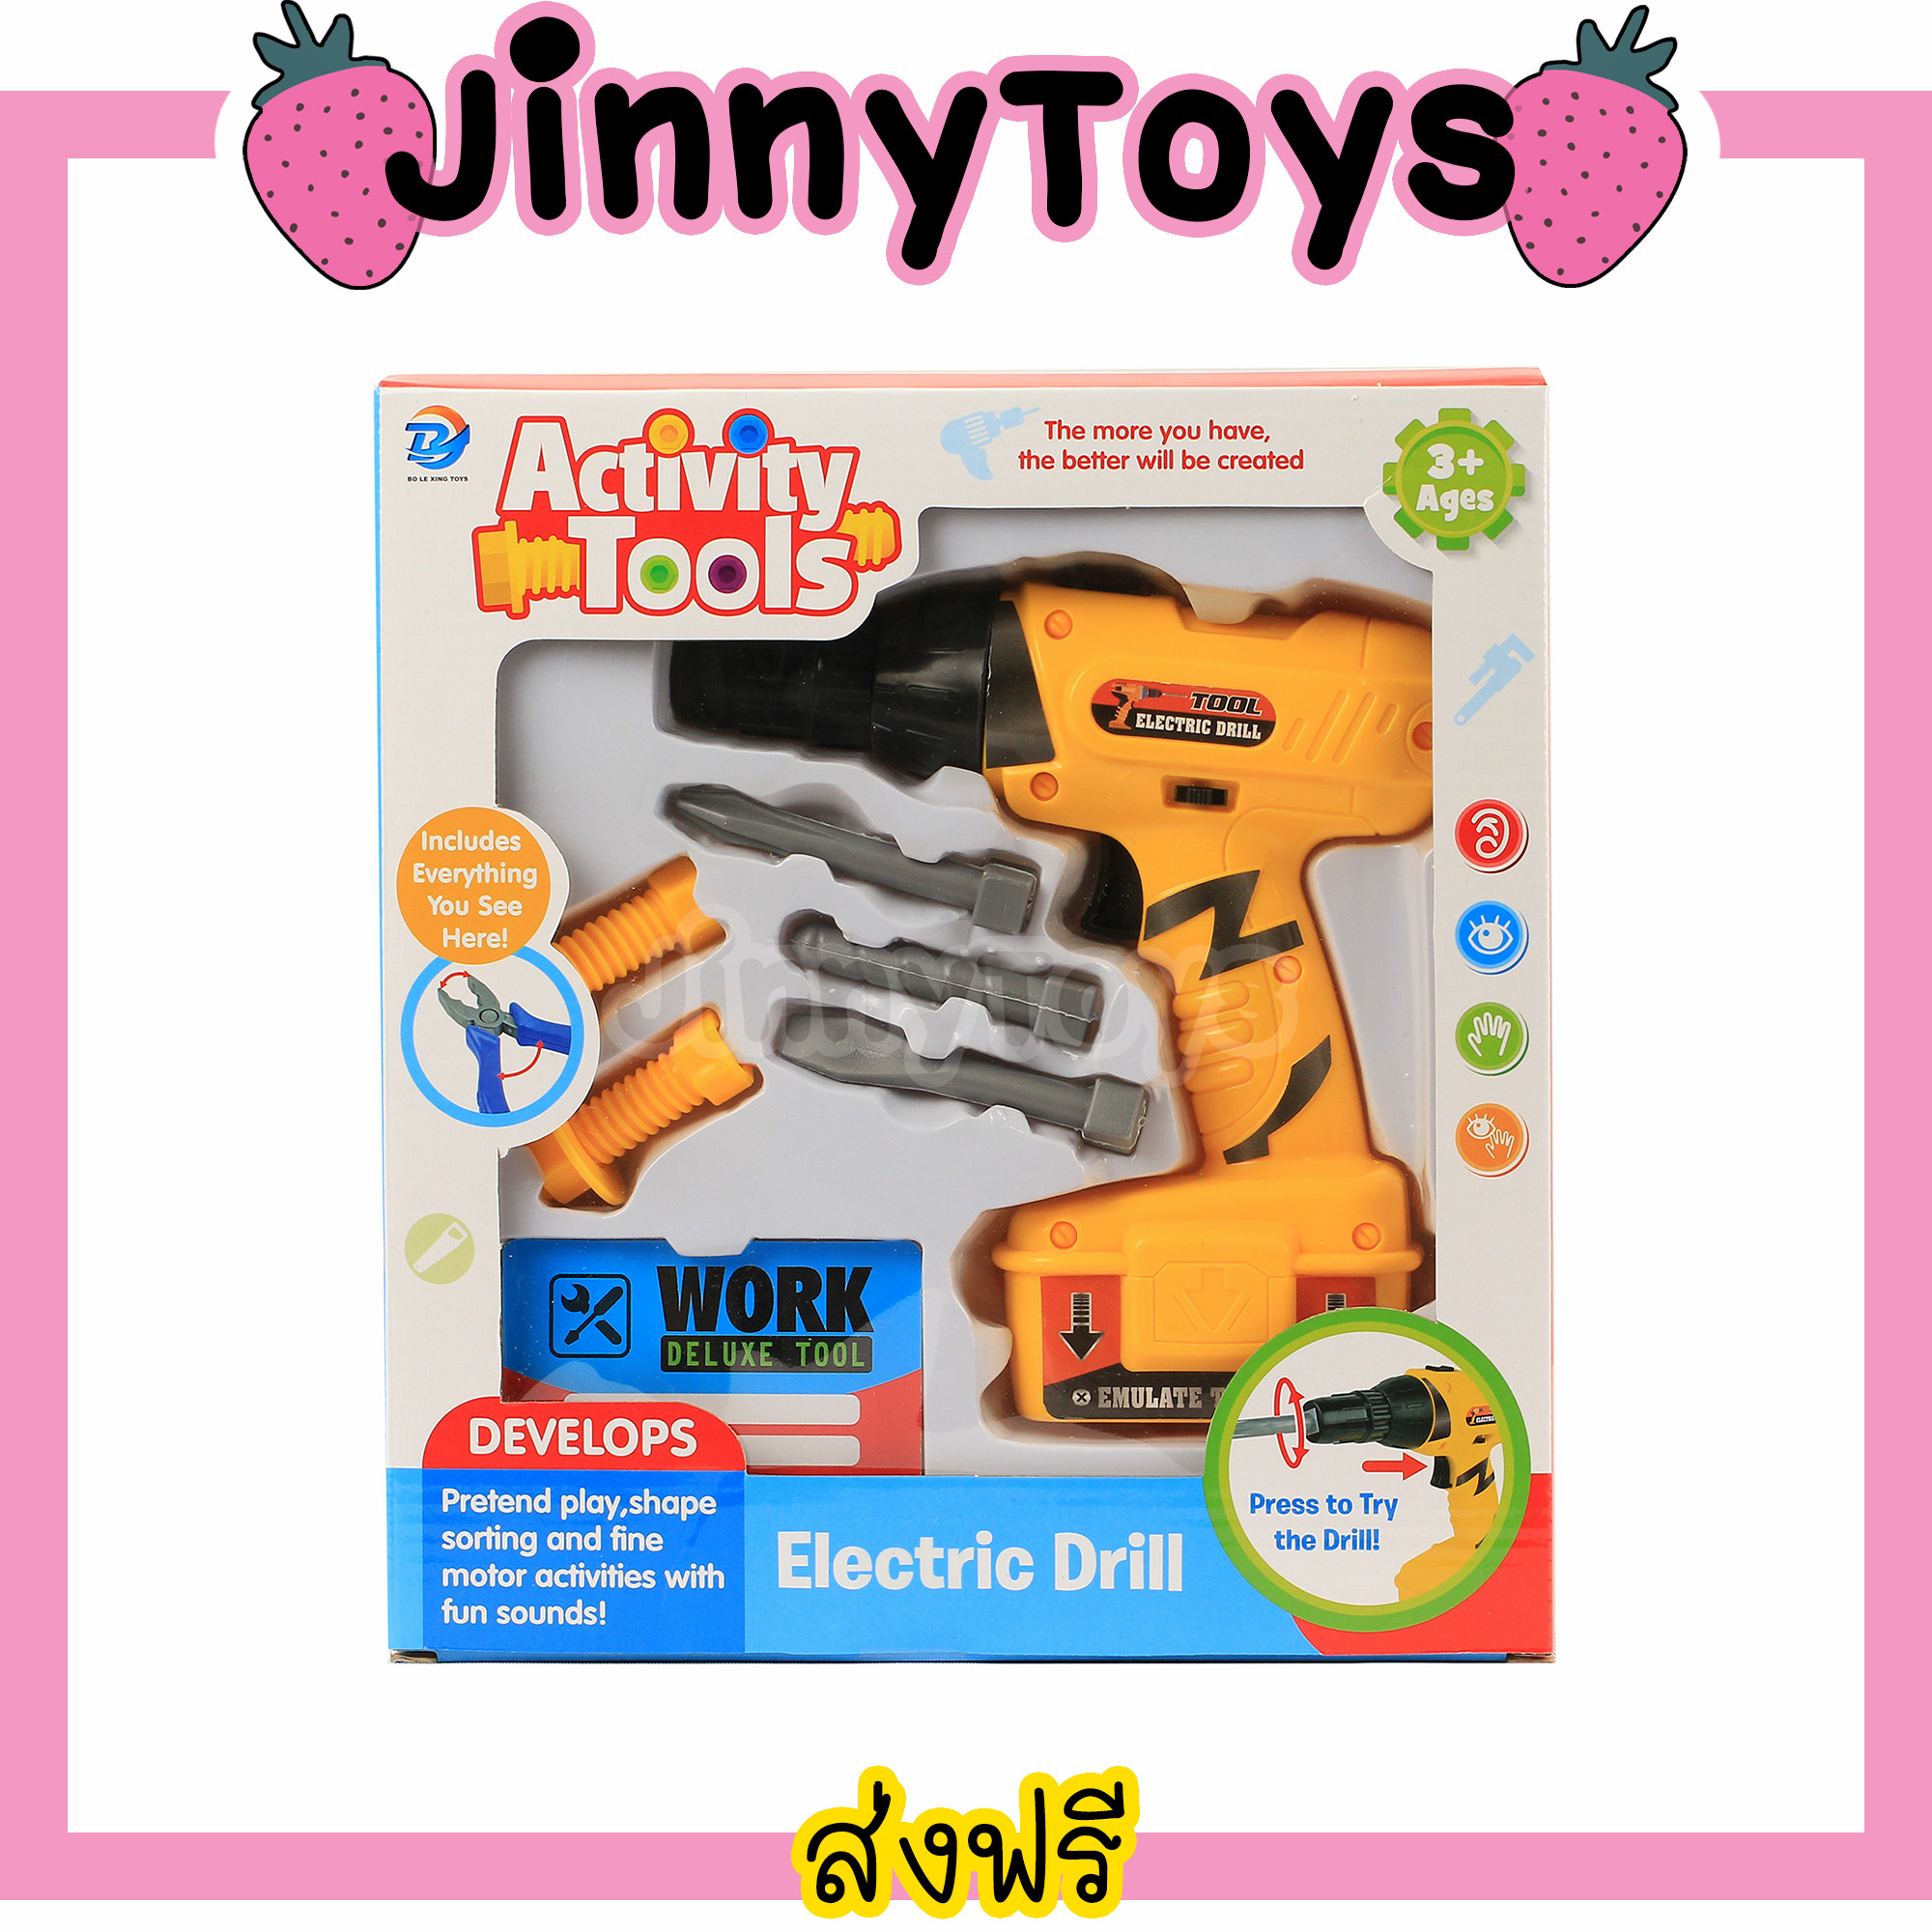 Jinny Toys ของเล่นเด็ก สว่าน ของเล่นสว่าน หมุนได้ สีเหลือง Active Tools Electric Drill สว่านของเล่น เครื่องมือช่าง ของเล่นช่าง เครื่องมือช่างเด็ก ของเล่นเครื่องมือช่าง เครื่องมือช่างของเล่น ของเล่นวิศวกร ของเล่นจำลอง ของเล่นเสริมทักษะ ของเล่นเด็กชาย